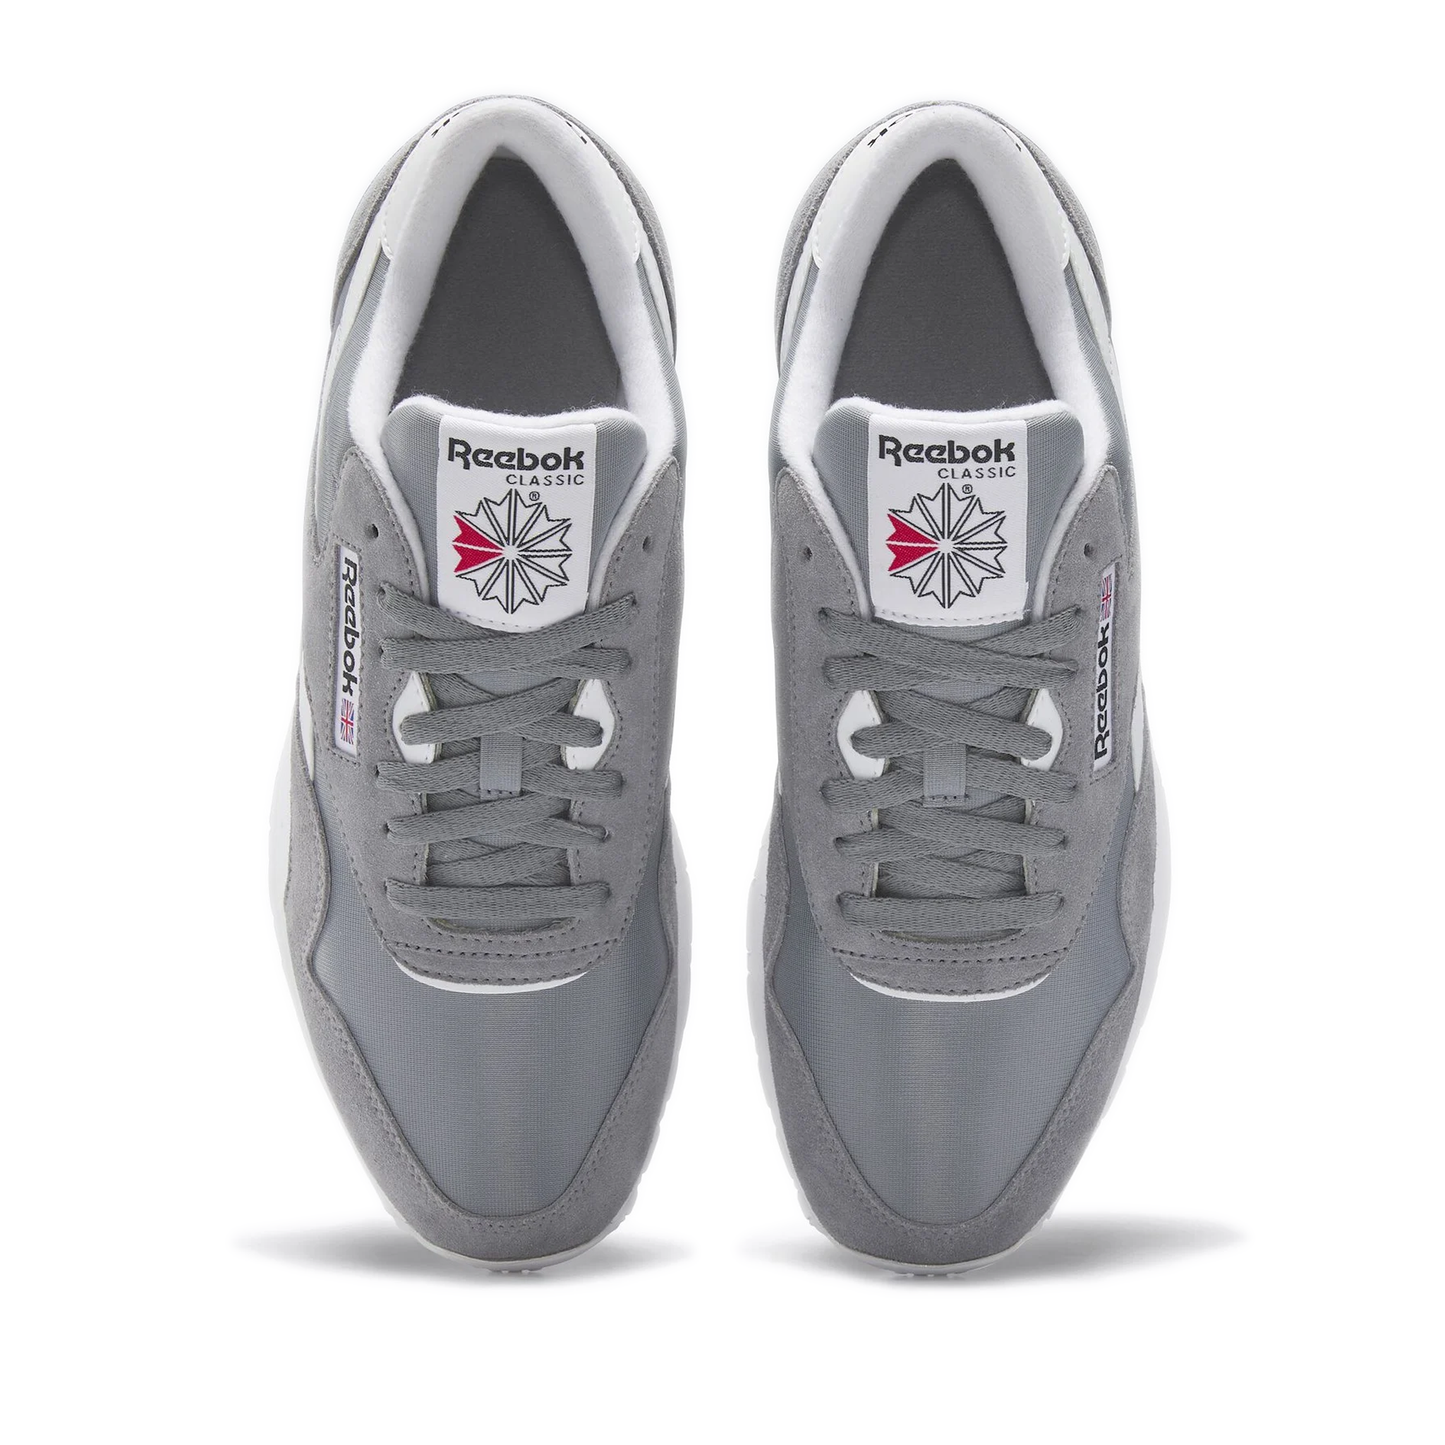 Men's Reebok Classic Nylon Shoes - Pure Grey 5 /Footwear White